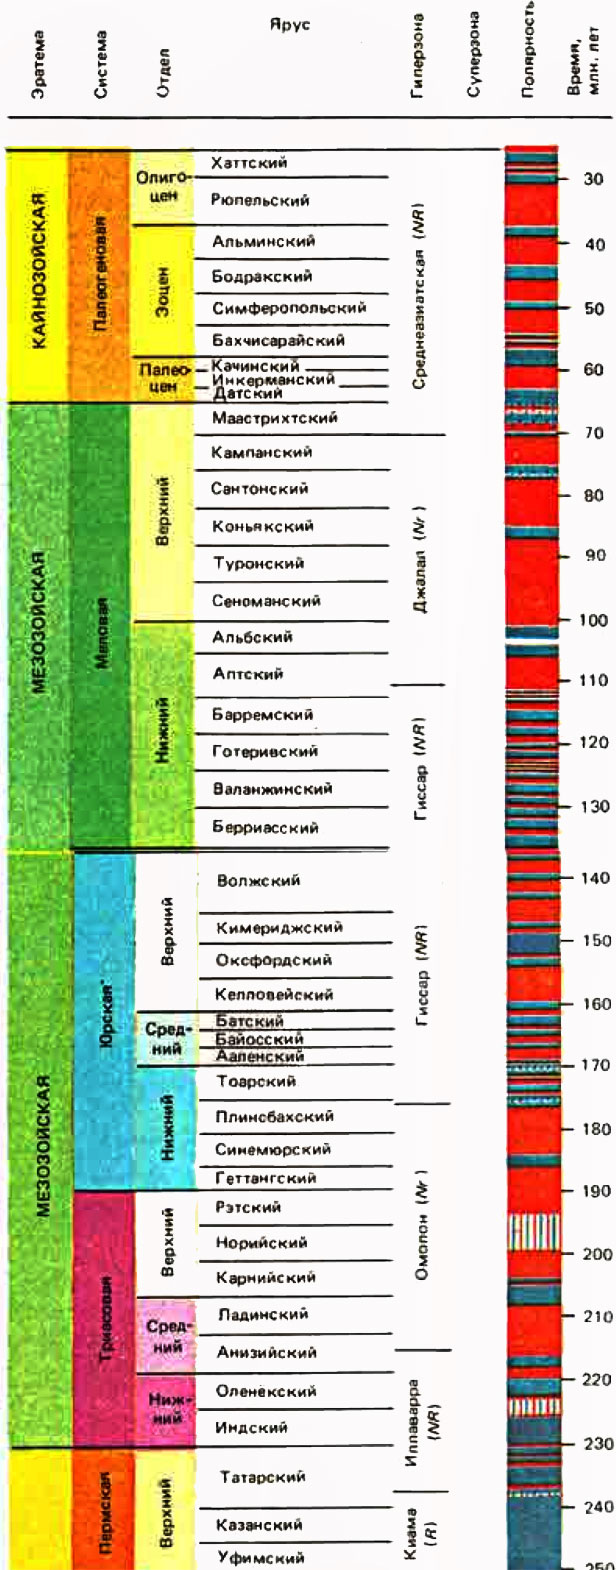 Таблица 7. Папеомагнитмая шкапа палеозоя, мезозоя и палеогена